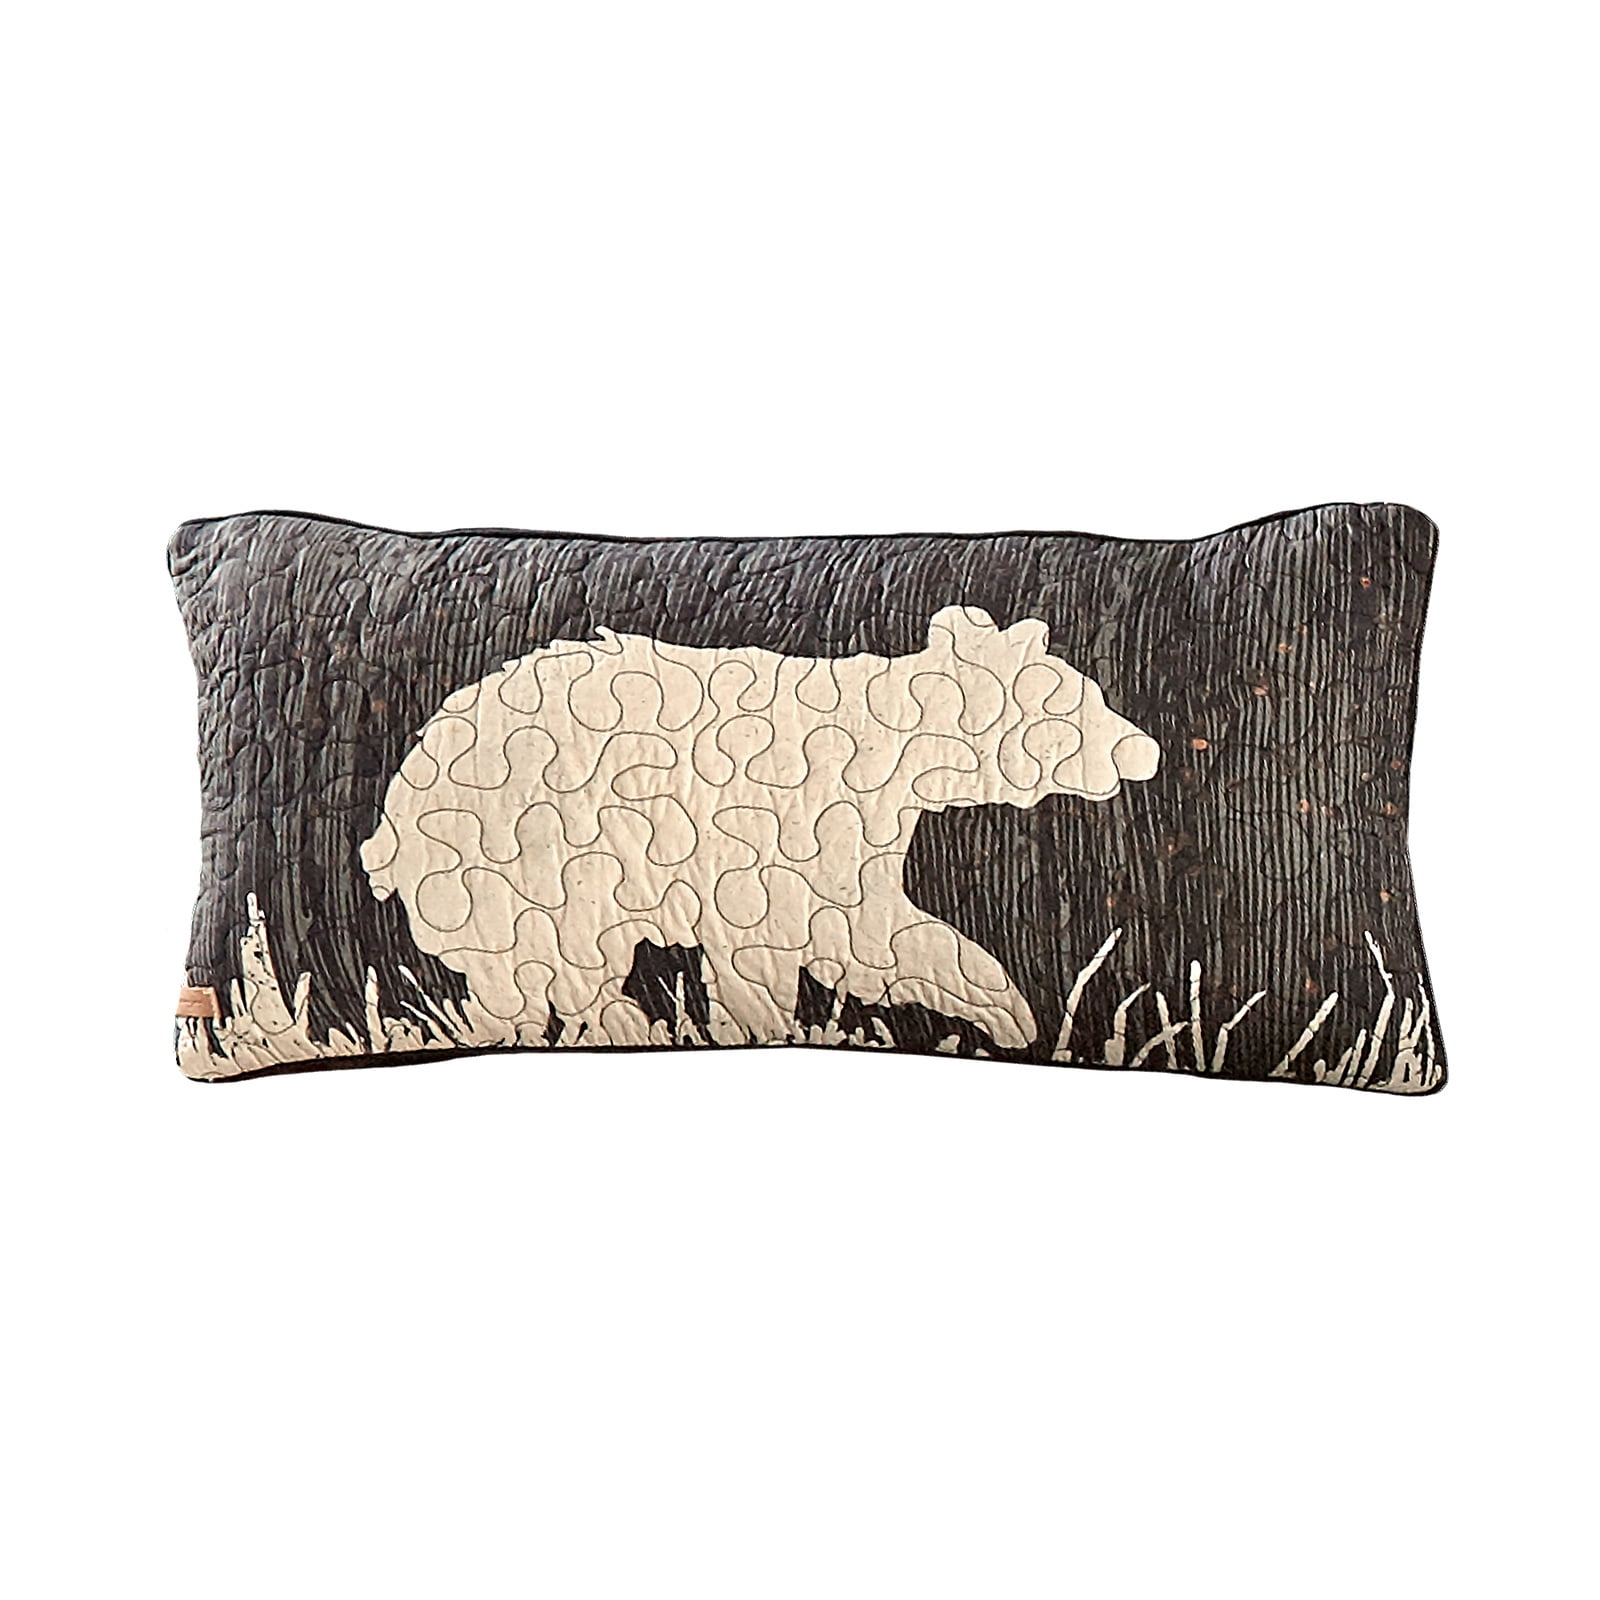 61117 11 X 22 In. Moonlit Bear Rectangle Decorative Pillow, Multi Color